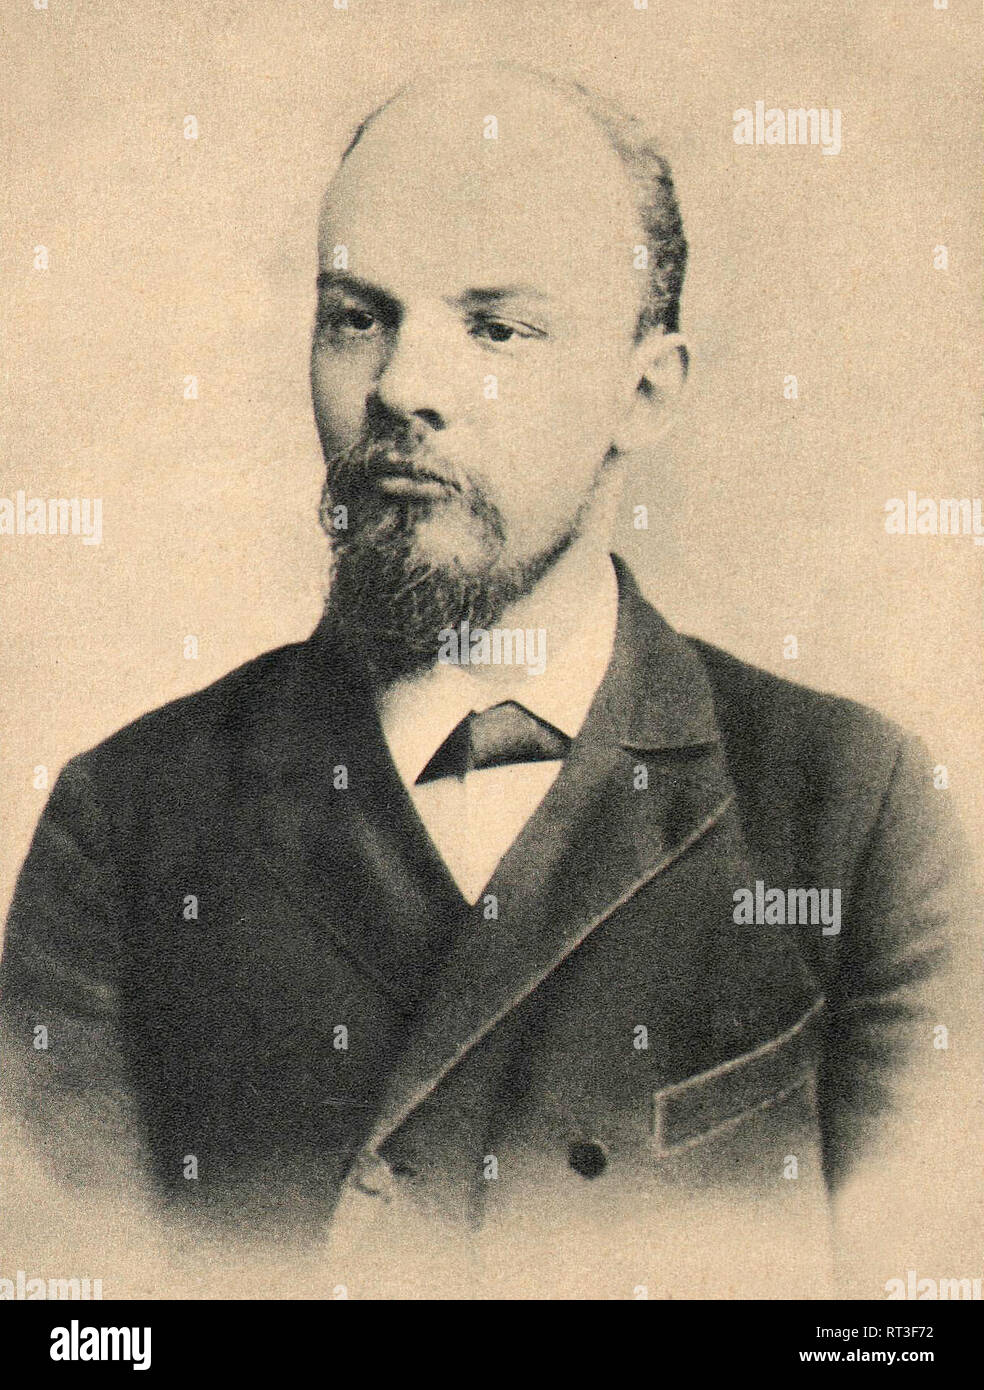 Photo portrait of Vladimir Lenin. Stock Photo